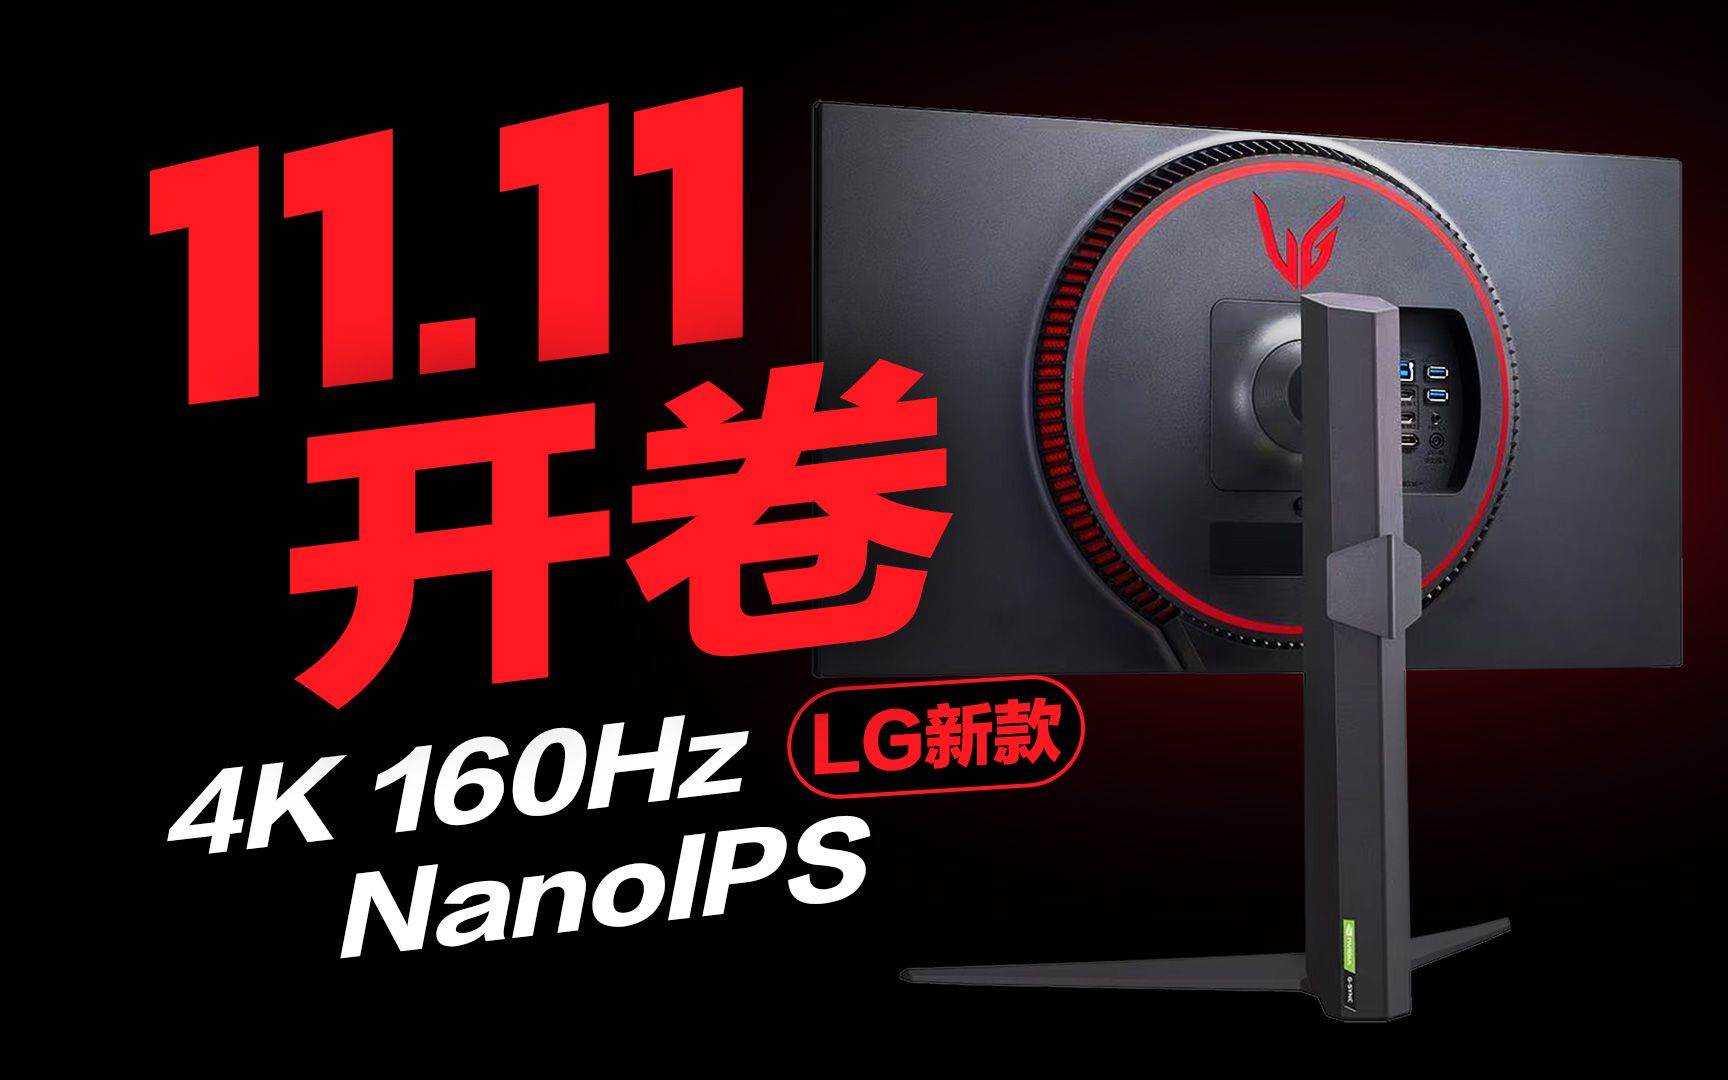 LG双11新款显示器 高性价比还是智商税  4K 160HZ NanoIPS 电竞显示器27GP95U 体验测试